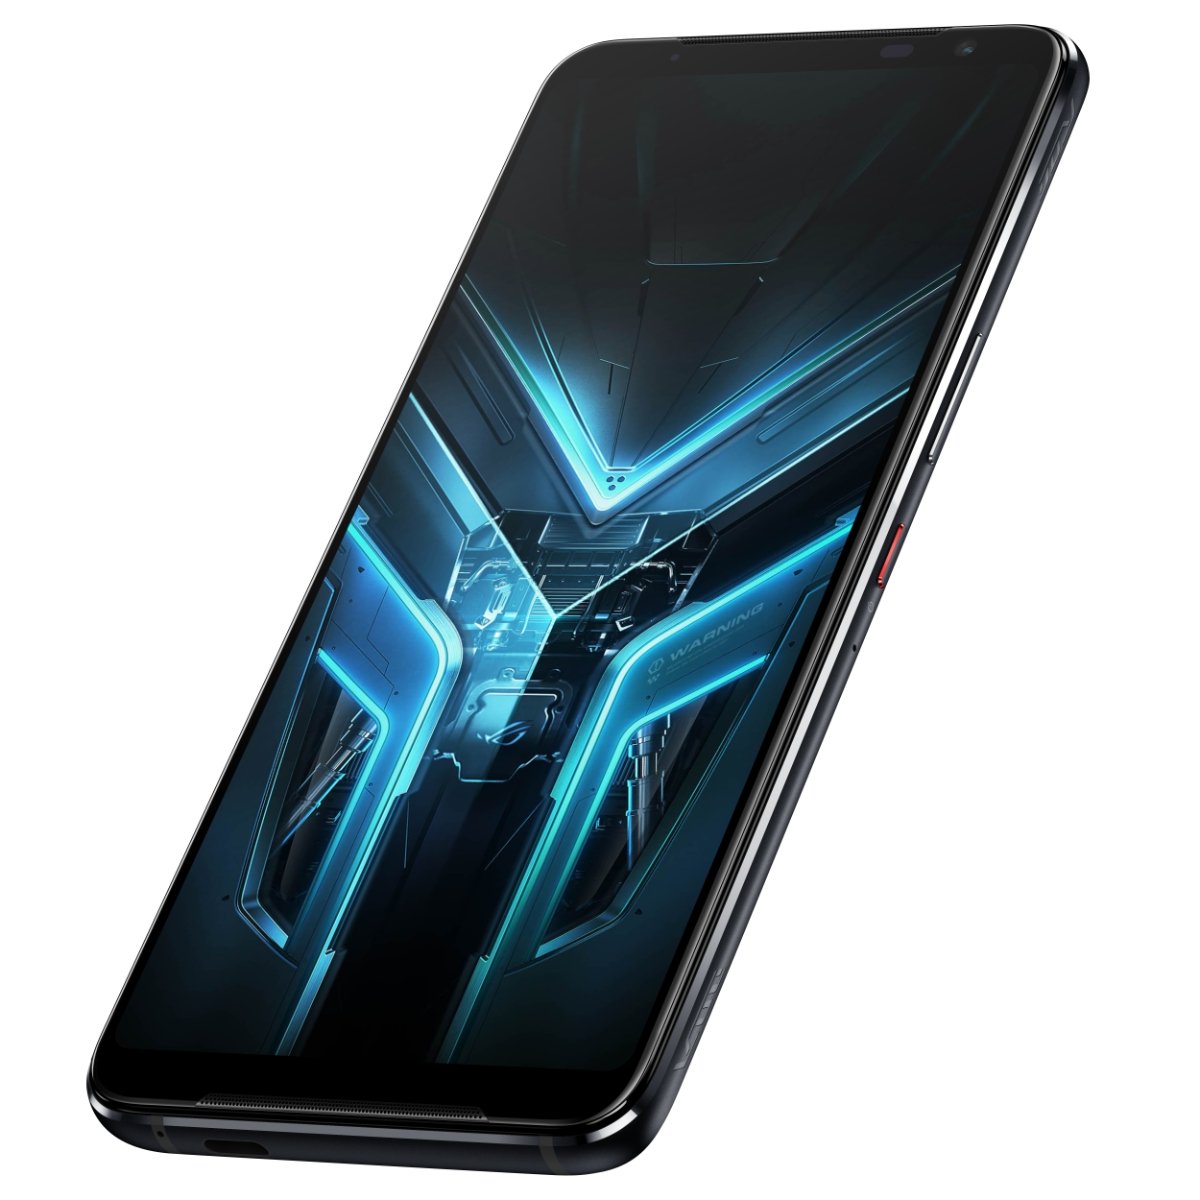 Asus ROG Phone 3 ZS661KS specs, review, release date - PhonesData